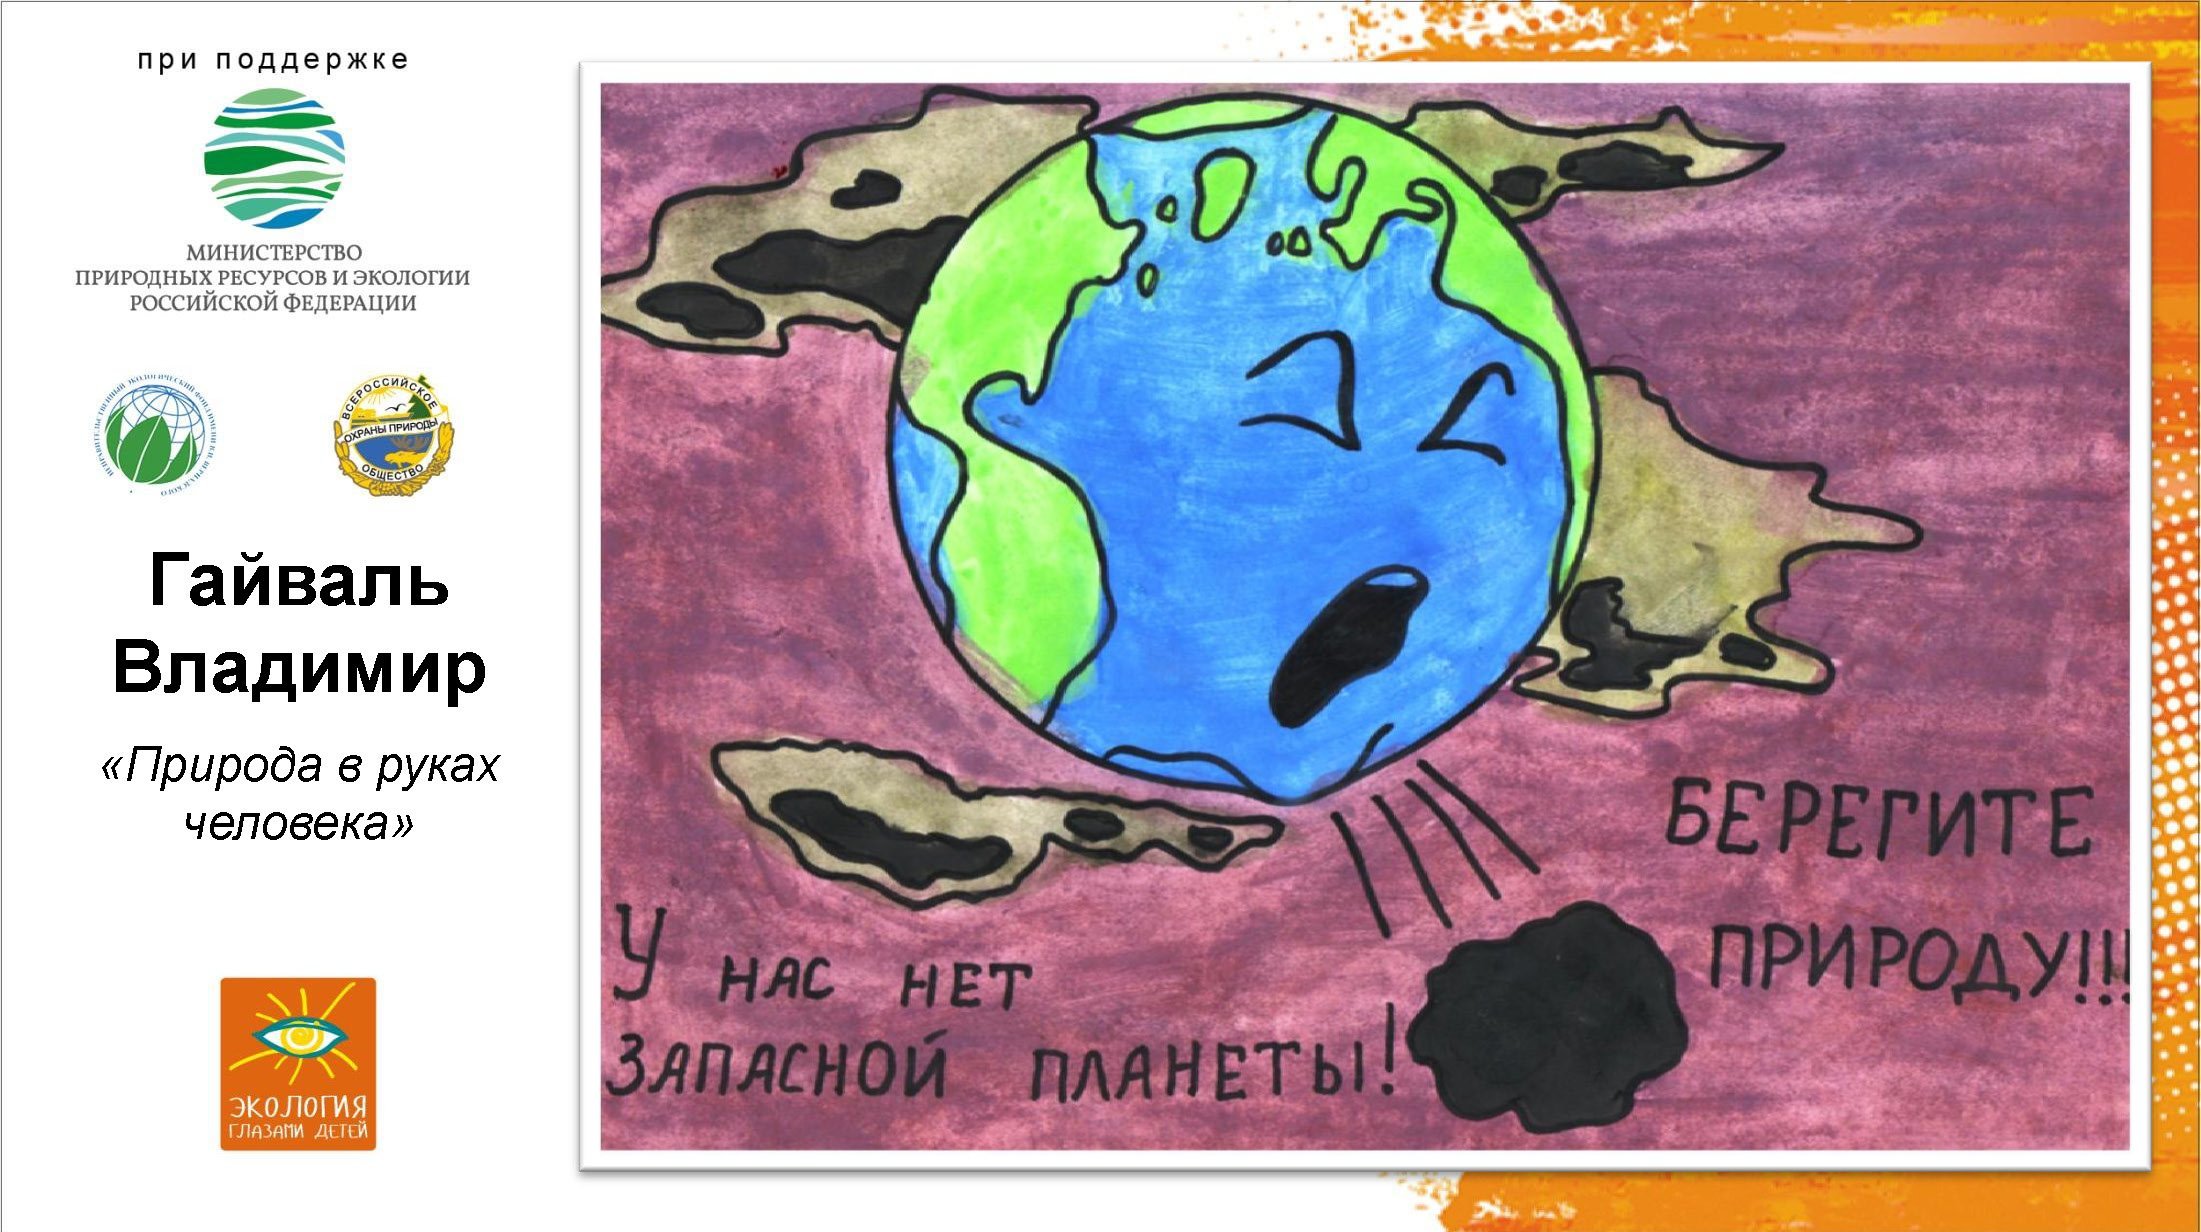 Минприроды 2020. Рисунок на экологическую тему. Плакат на экологическую тему. Конкурс экологических рисунков. Конкурс рисунков по экологии.